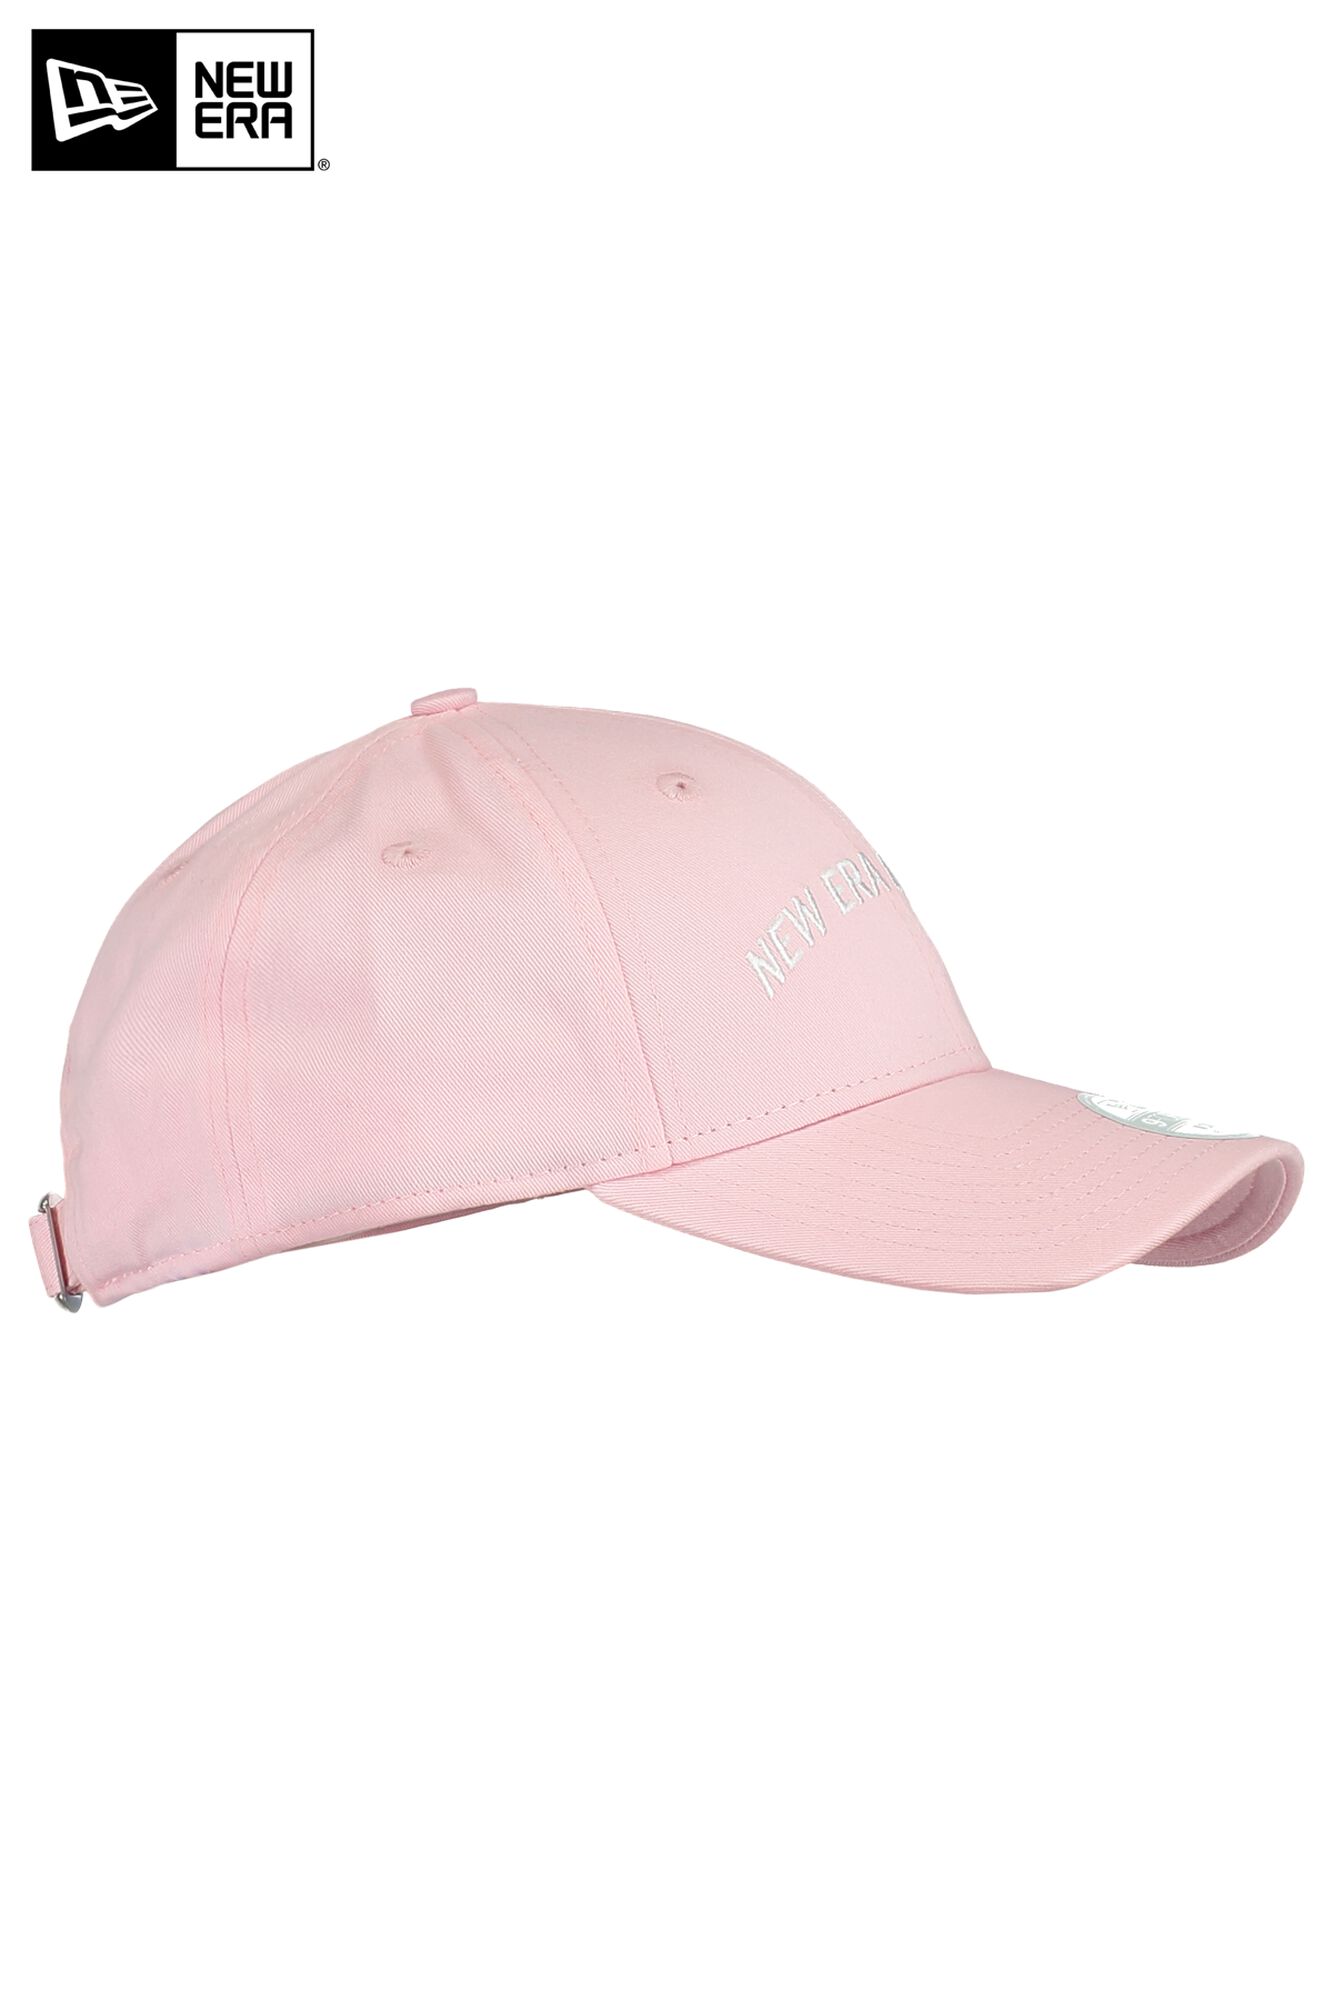 Men Cap New Era League Essential 940 Pink Buy Online